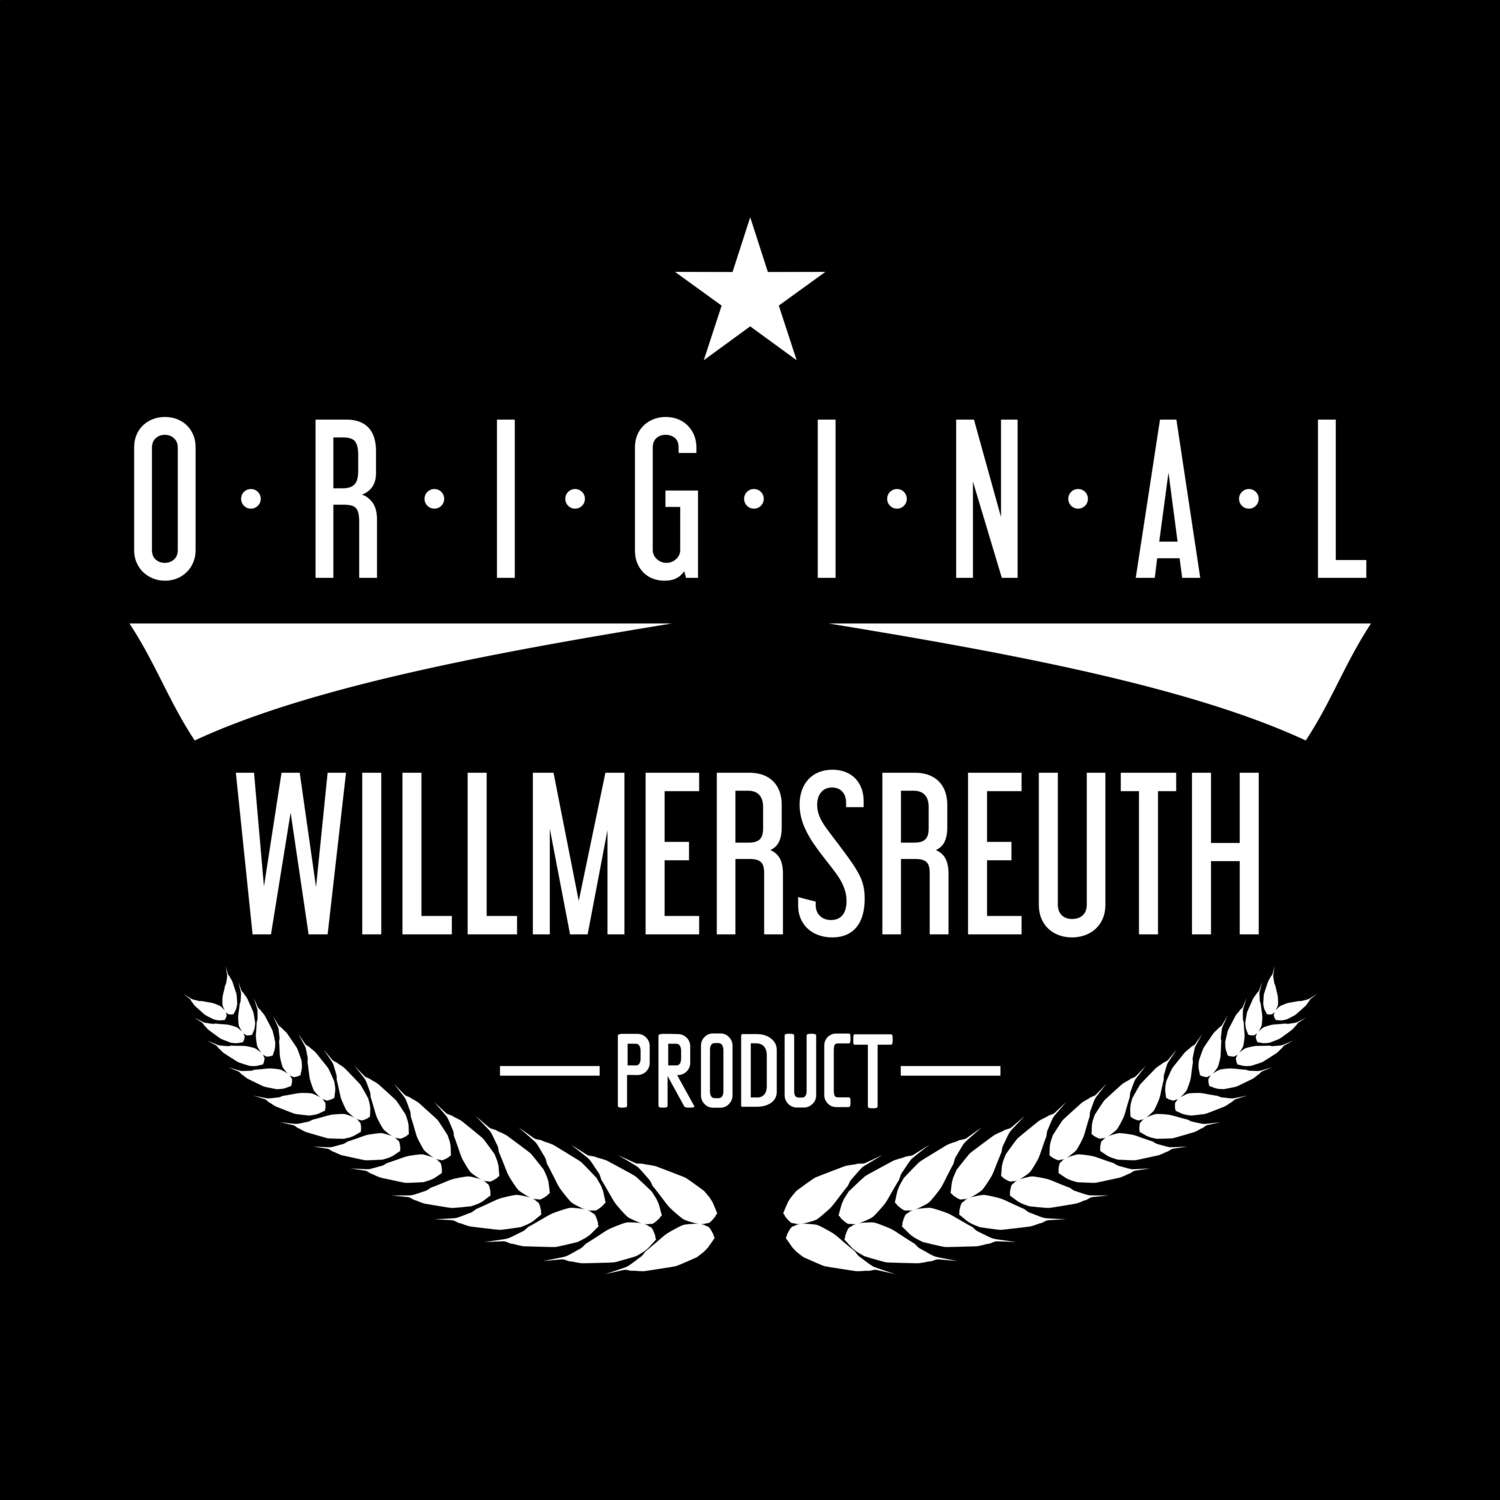 Willmersreuth T-Shirt »Original Product«